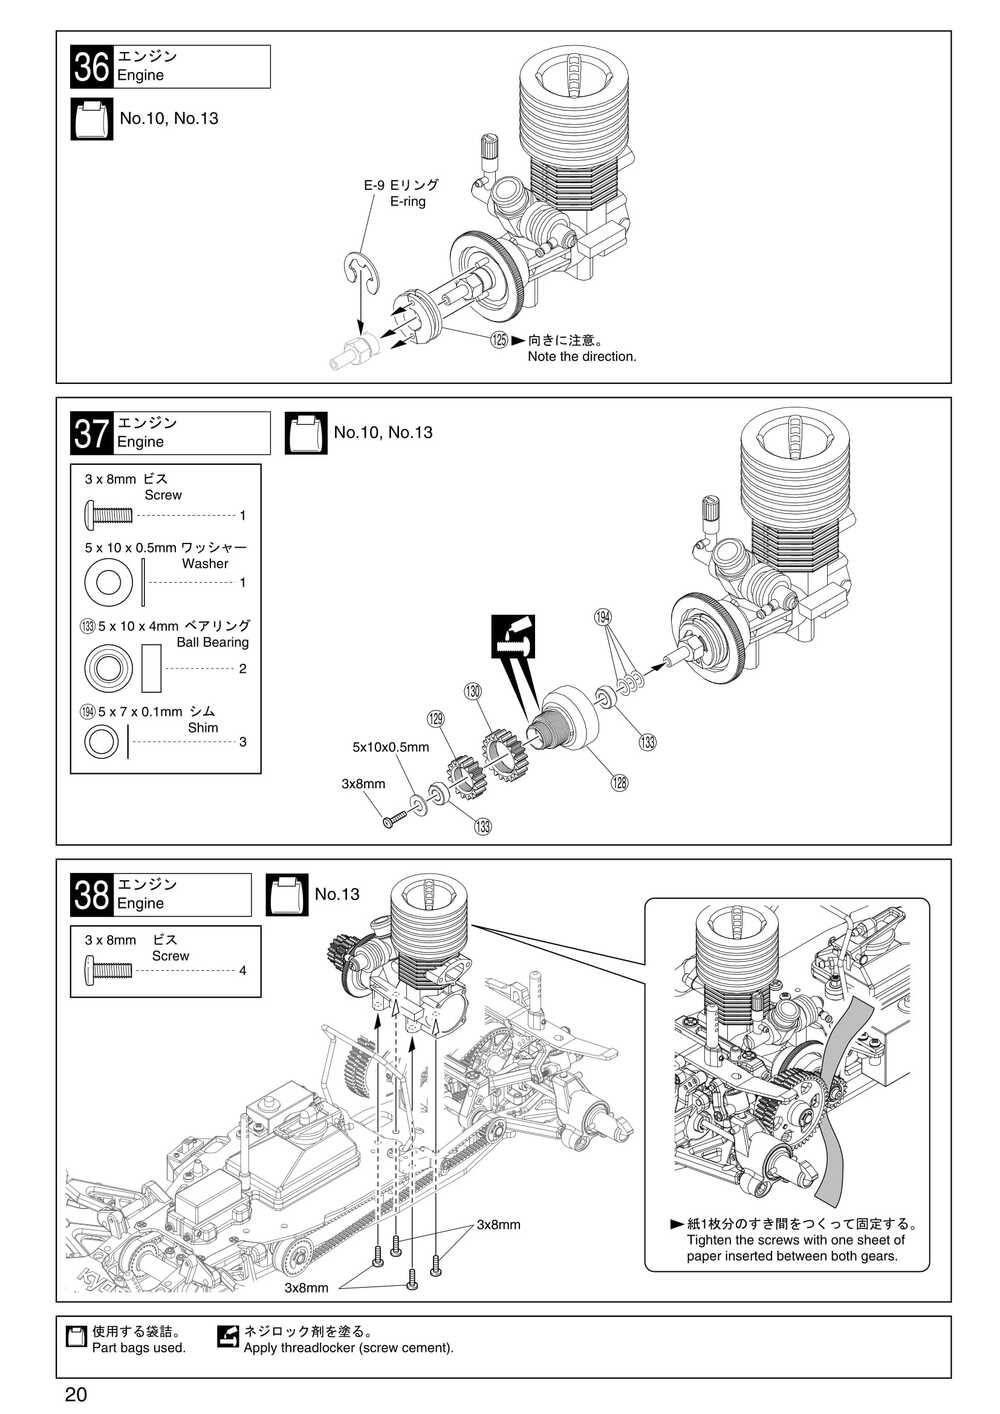 Kyosho - 31041 - Fantom Sports - Manual - Page 20